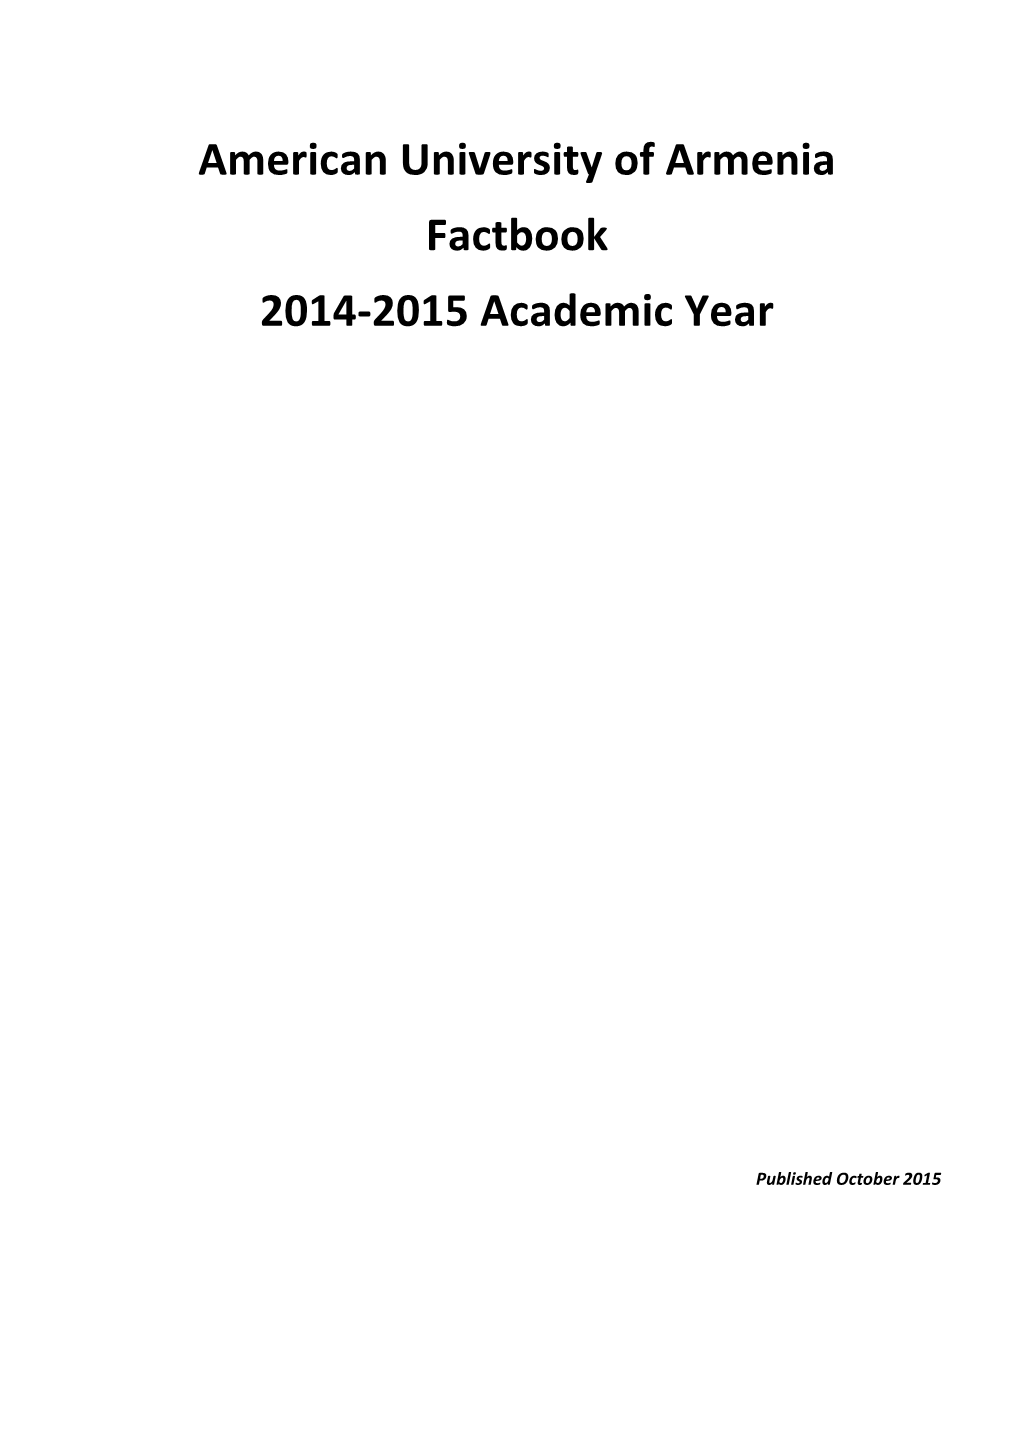 AUA Factbook 2014-2015